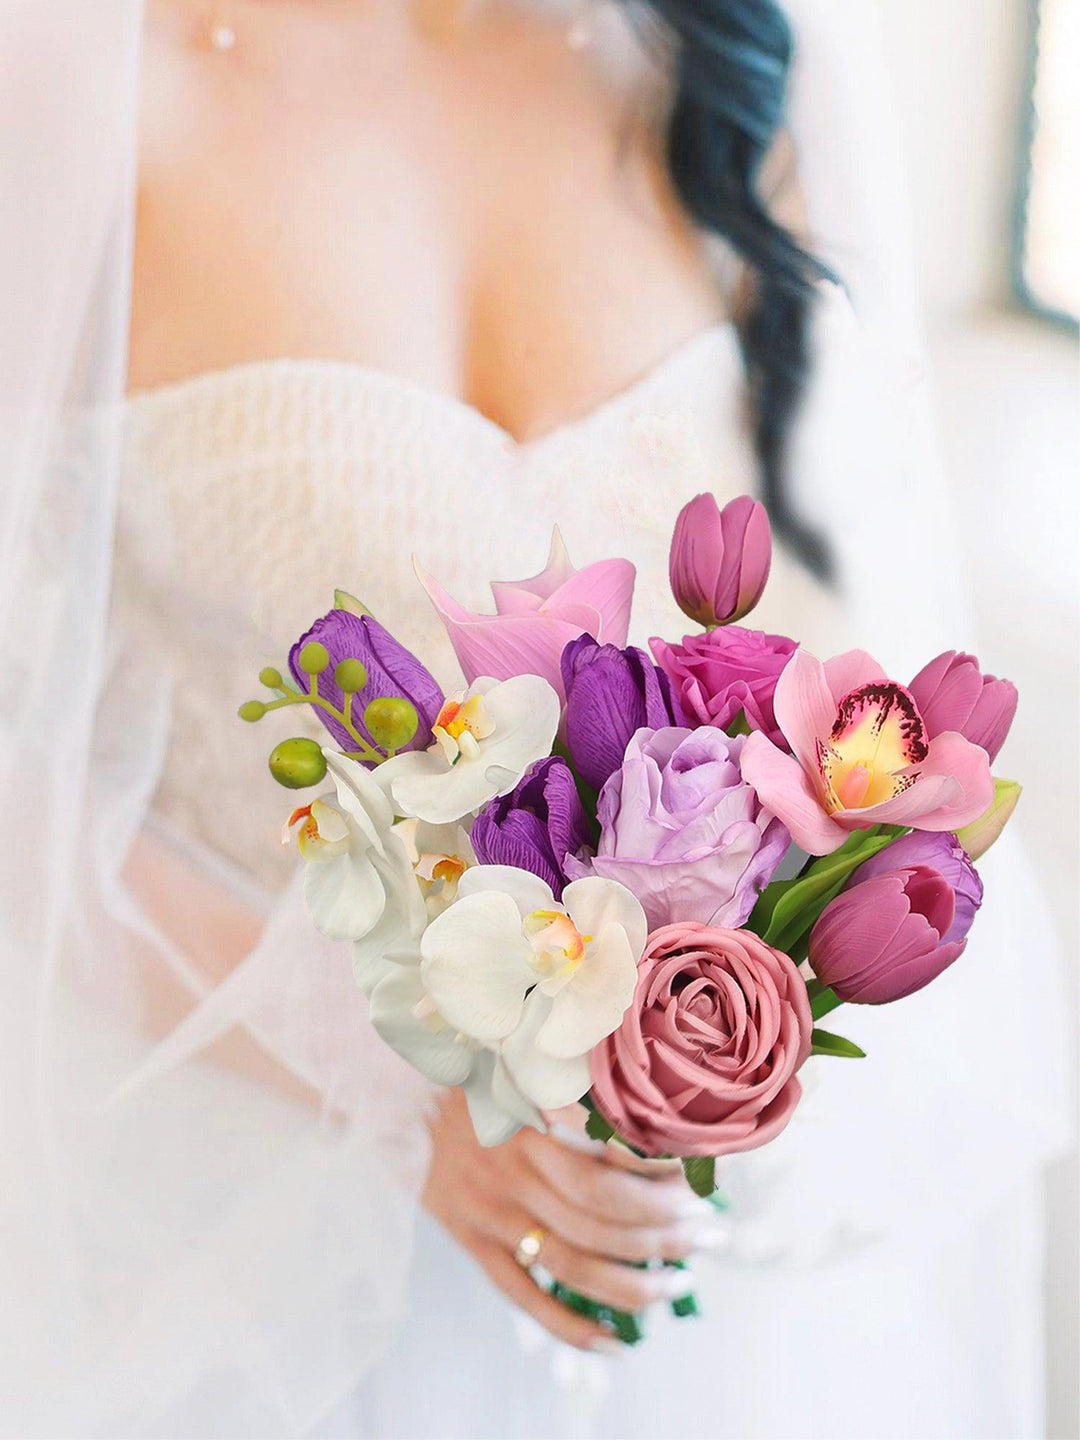 9.8 inch wide Pink & Purple Bridal Bouquet - Rinlong Flower